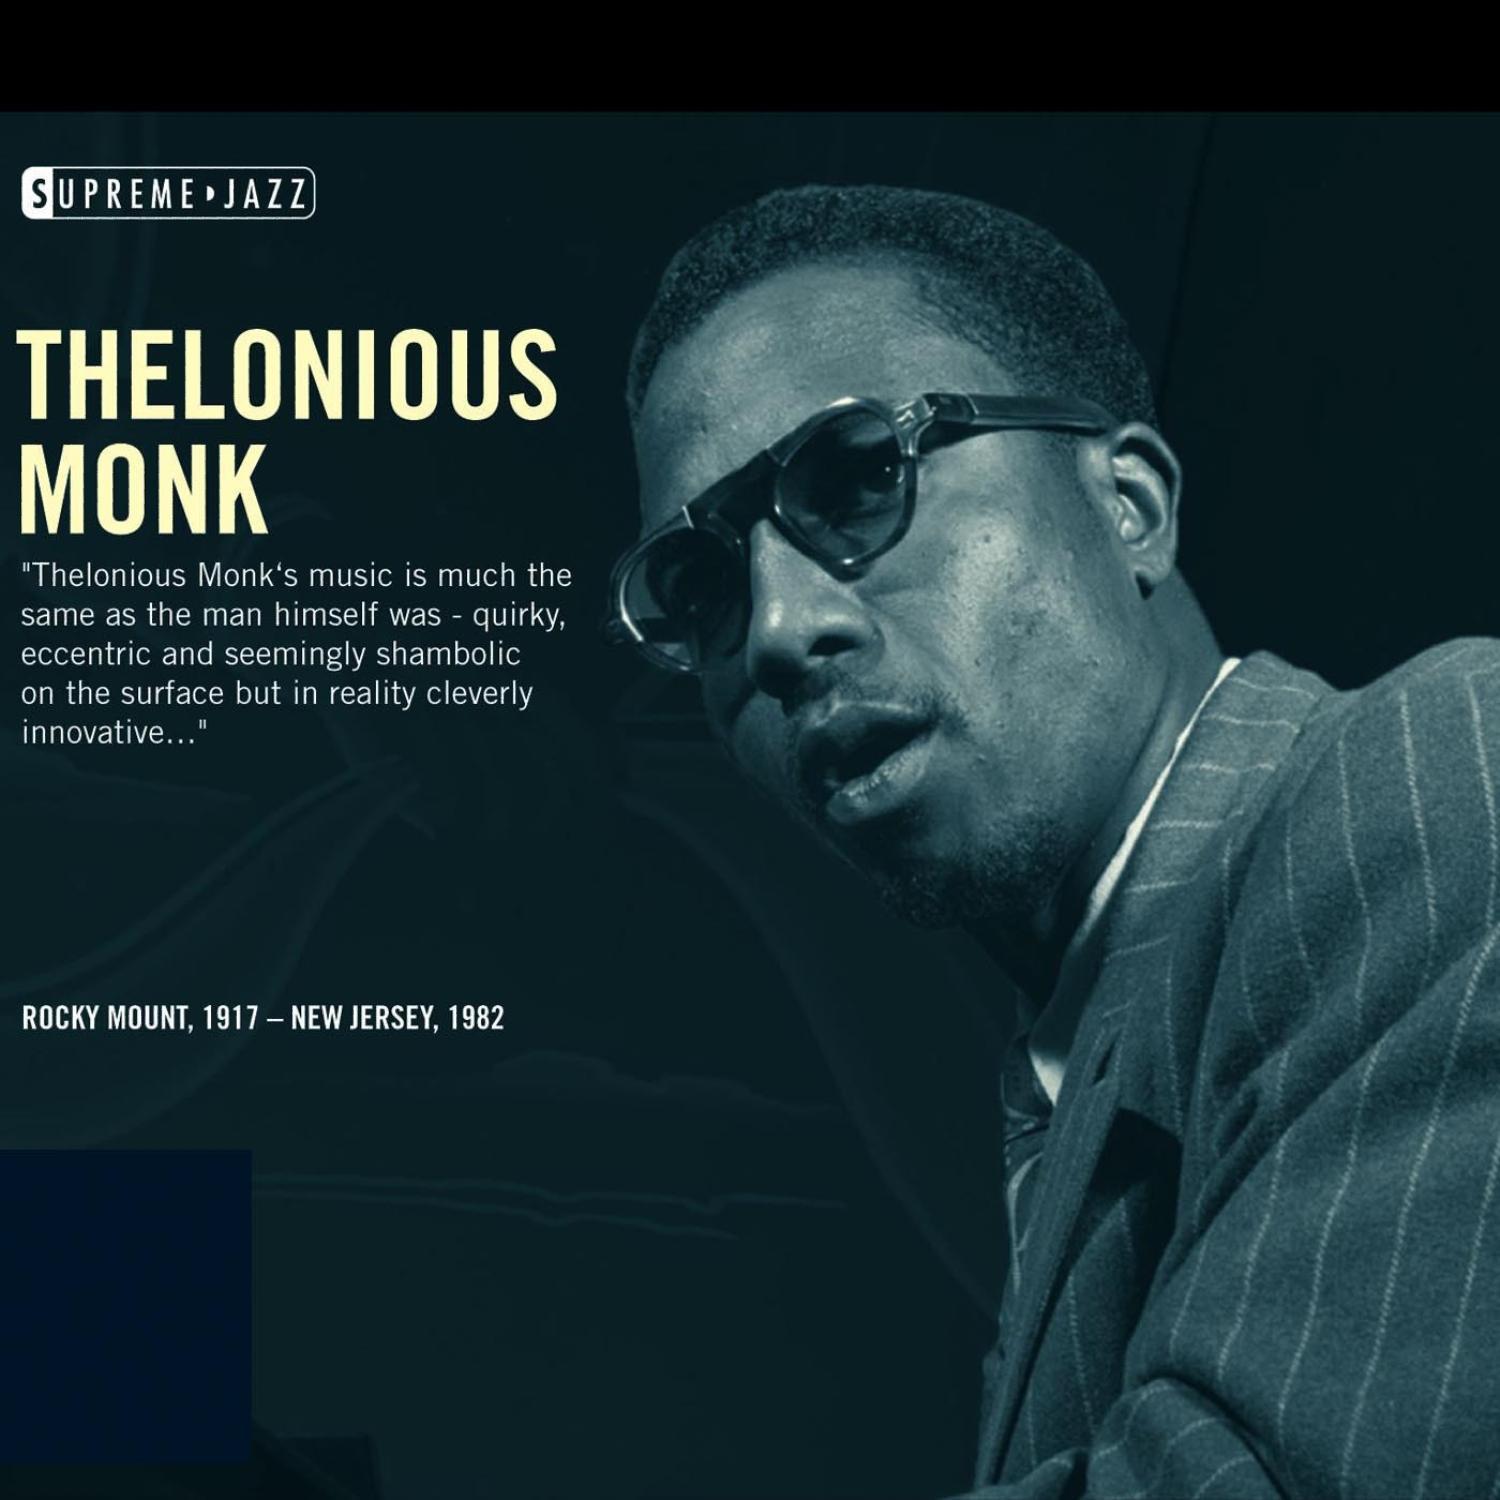 Supreme Jazz - Thelonious Monk